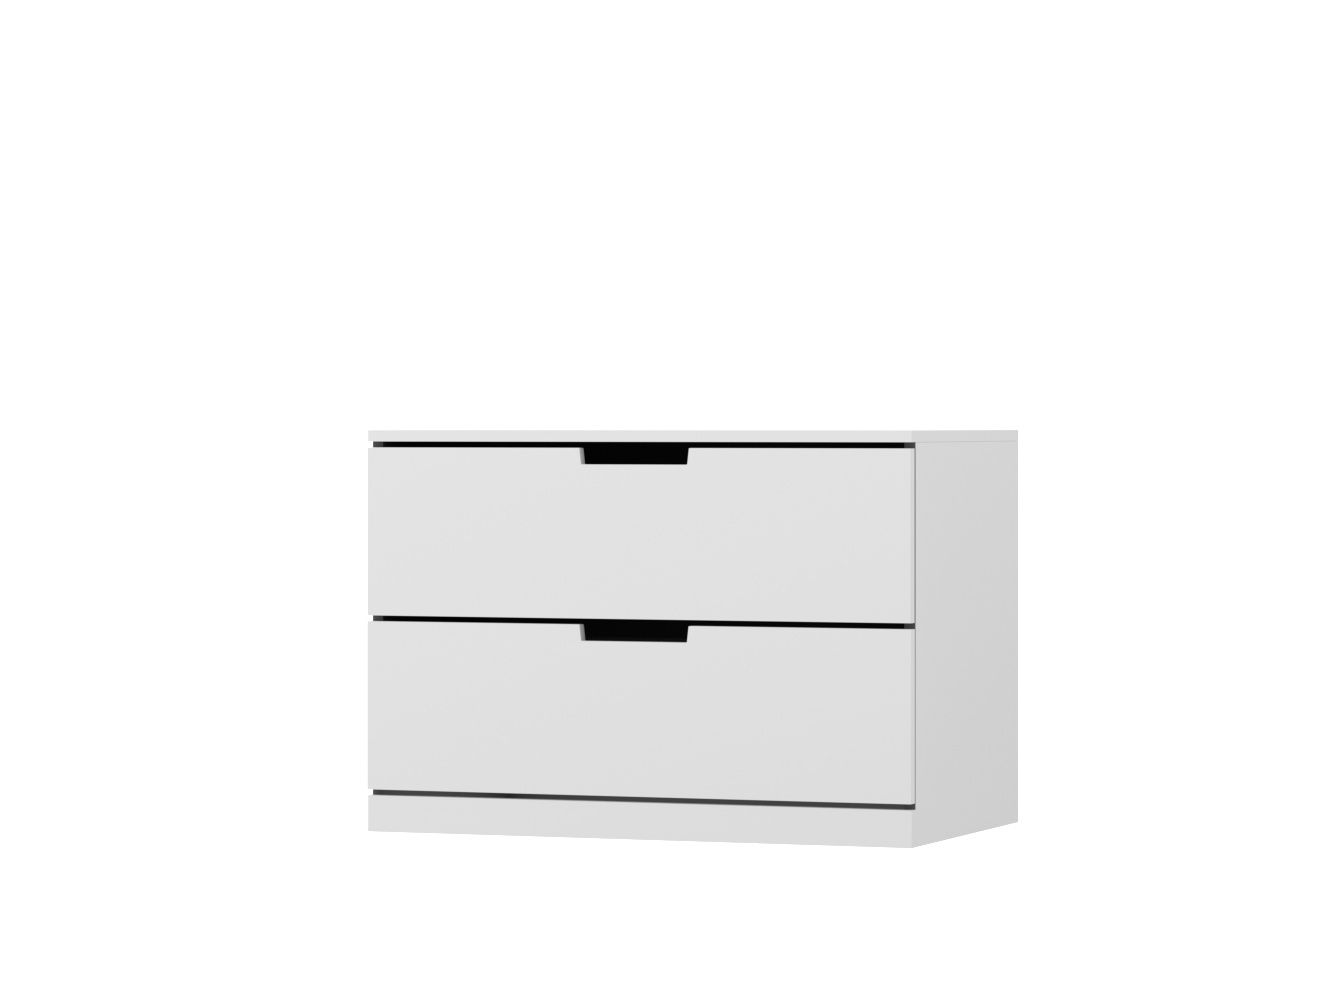 Изображение товара Комод Нордли 43 white ИКЕА (IKEA), 80x45x54 см на сайте adeta.ru